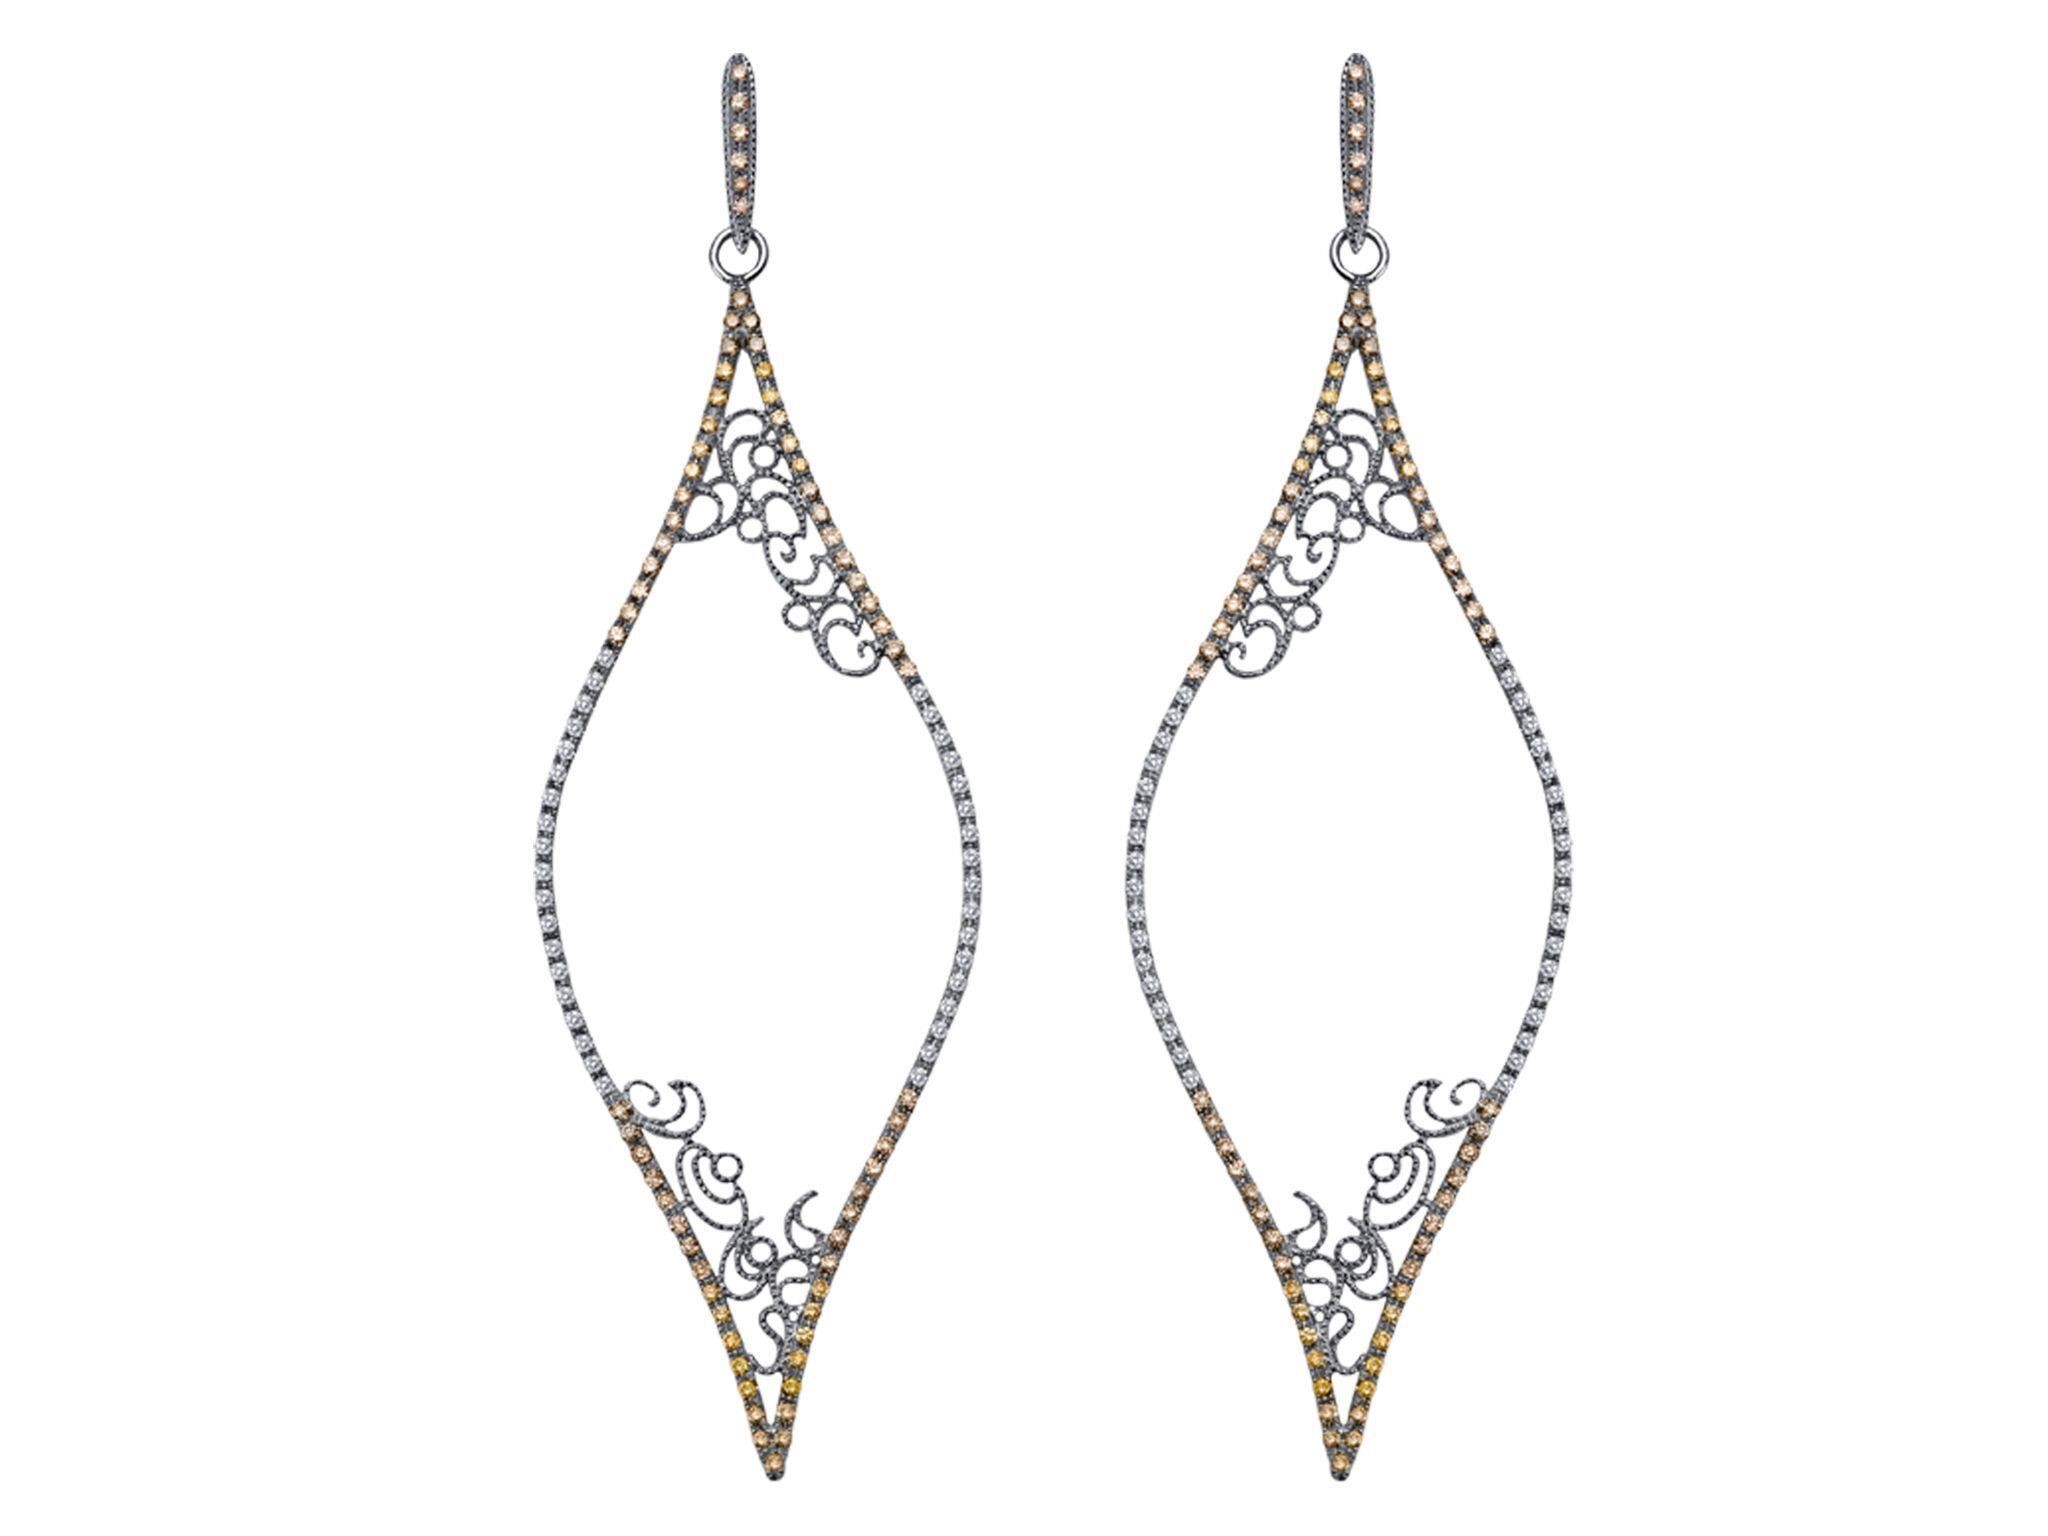 Delicate drop diamond earrings in assorted hues.